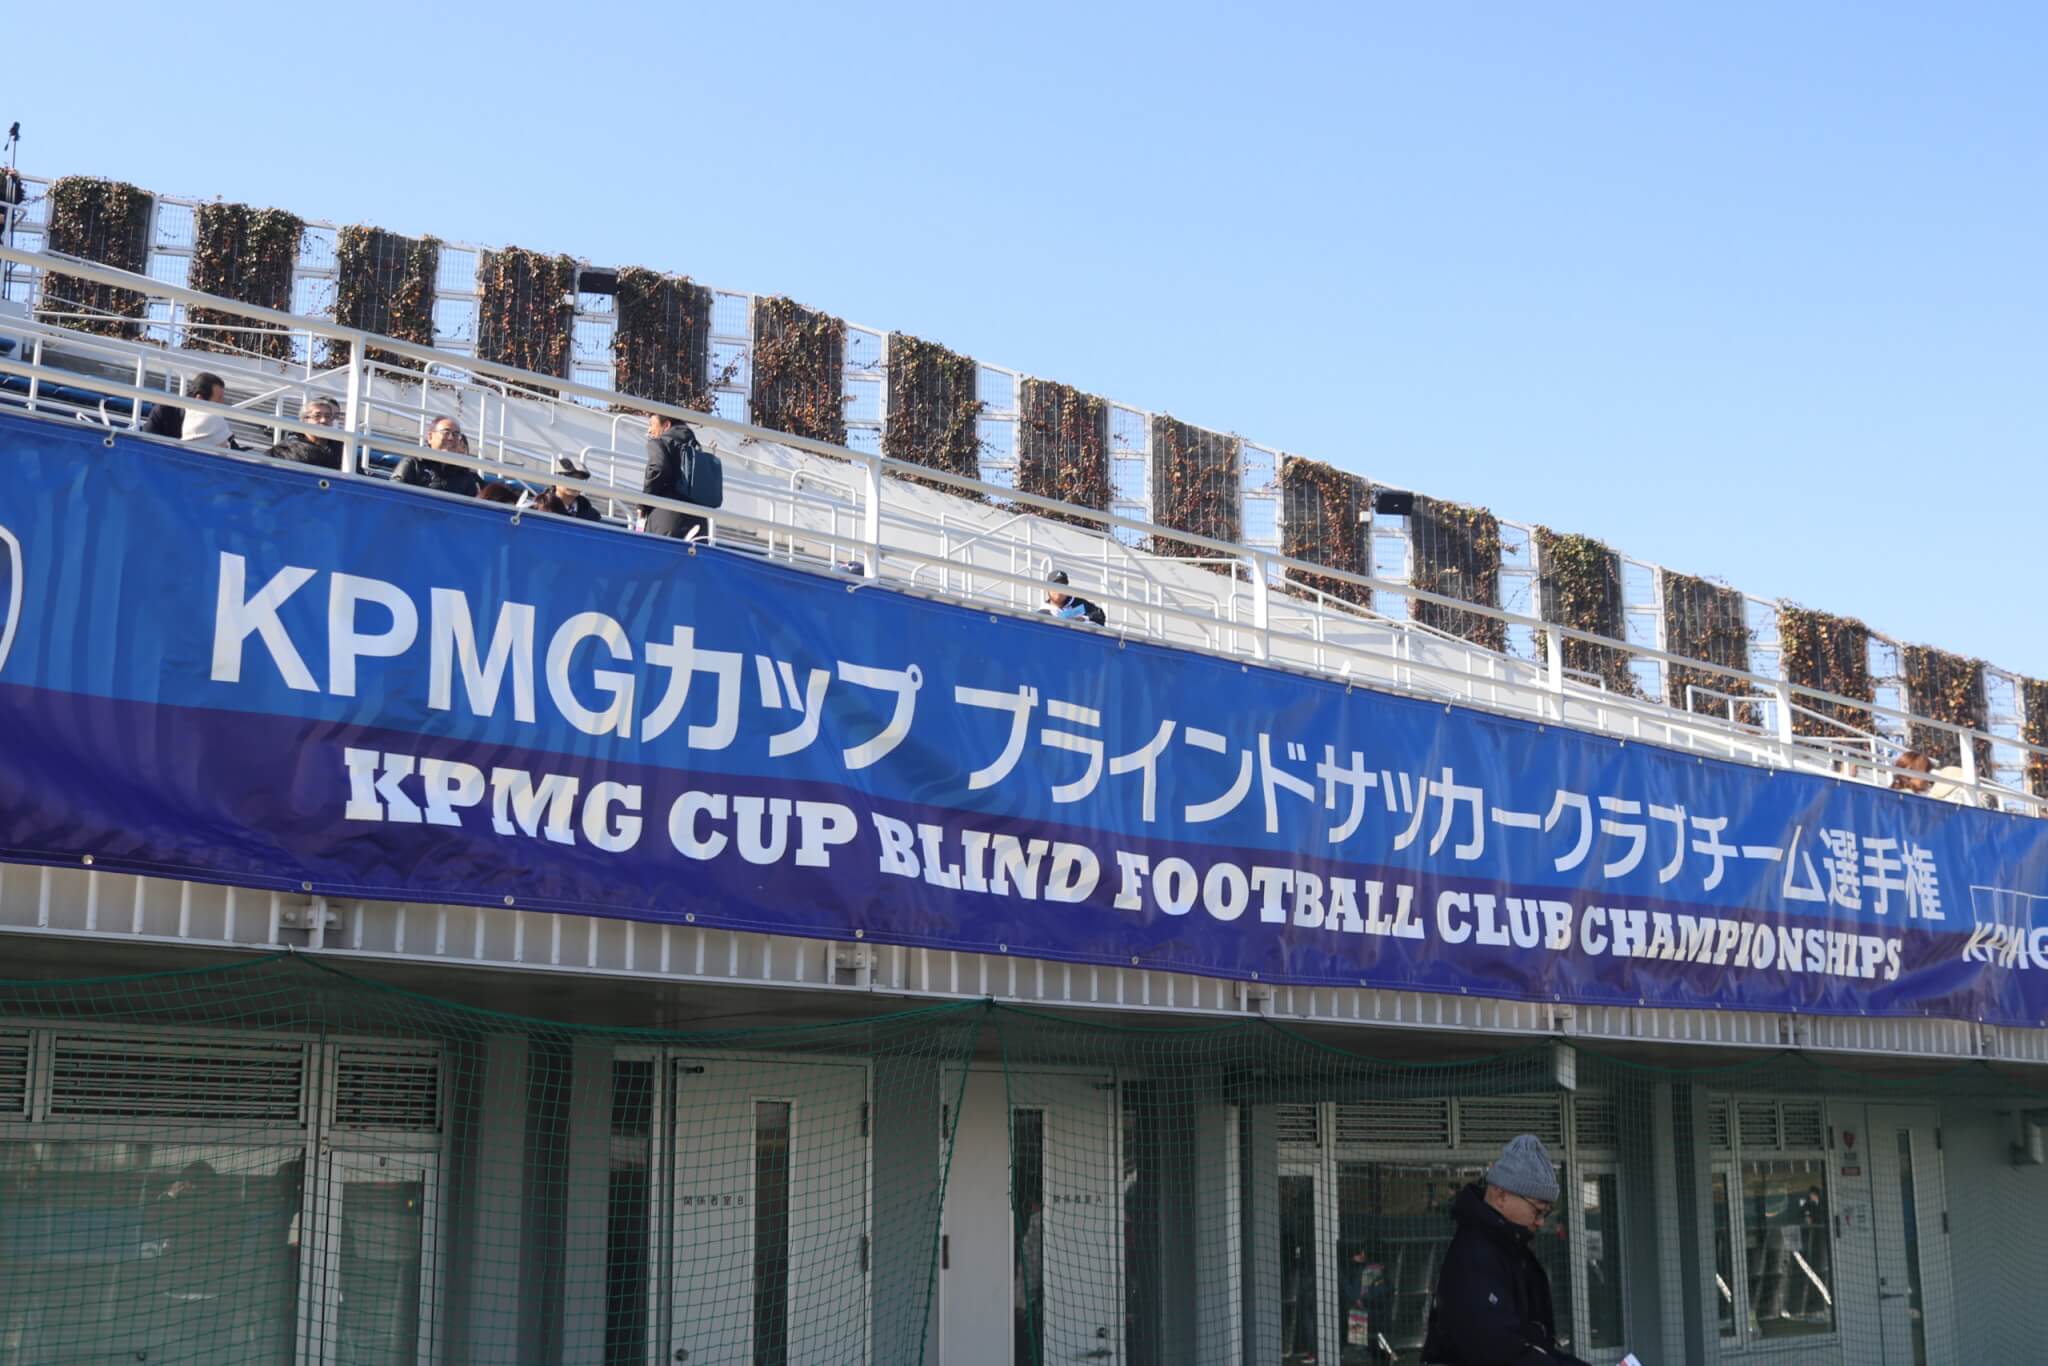 KPMGカップ